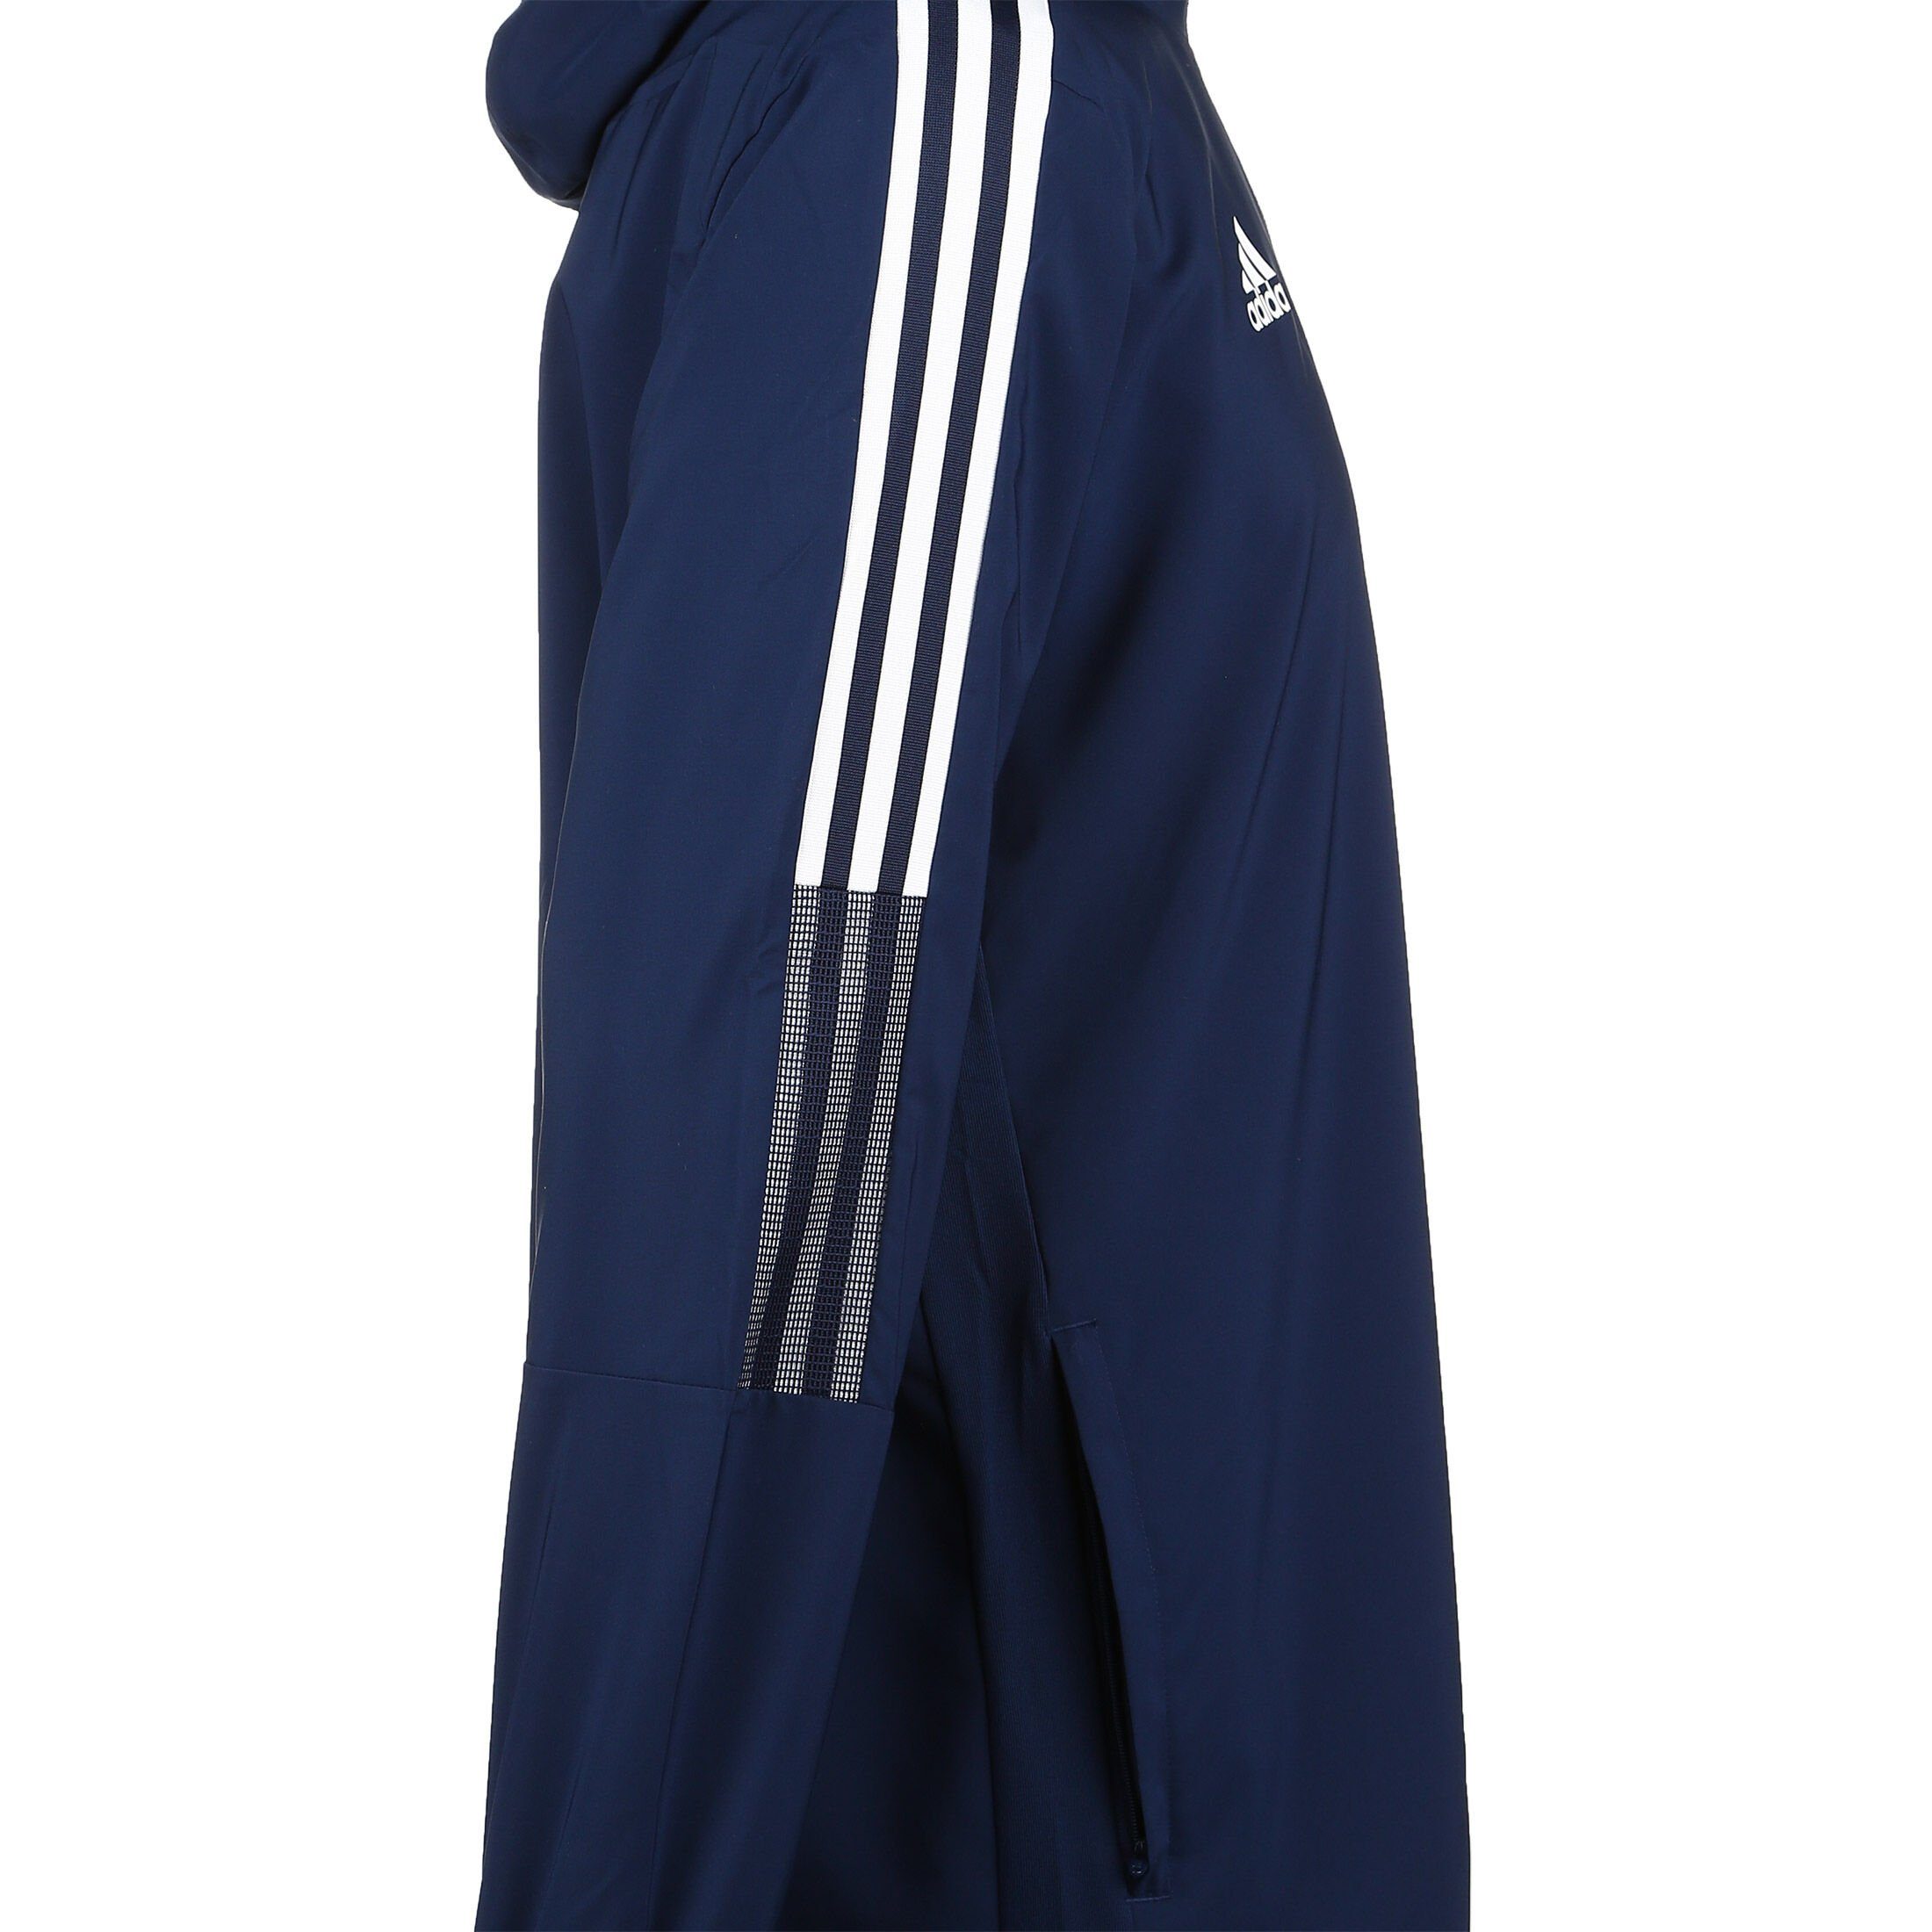 Tiro weiß Performance / Trainingsjacke Trainingsjacke 21 dunkelblau Herren adidas